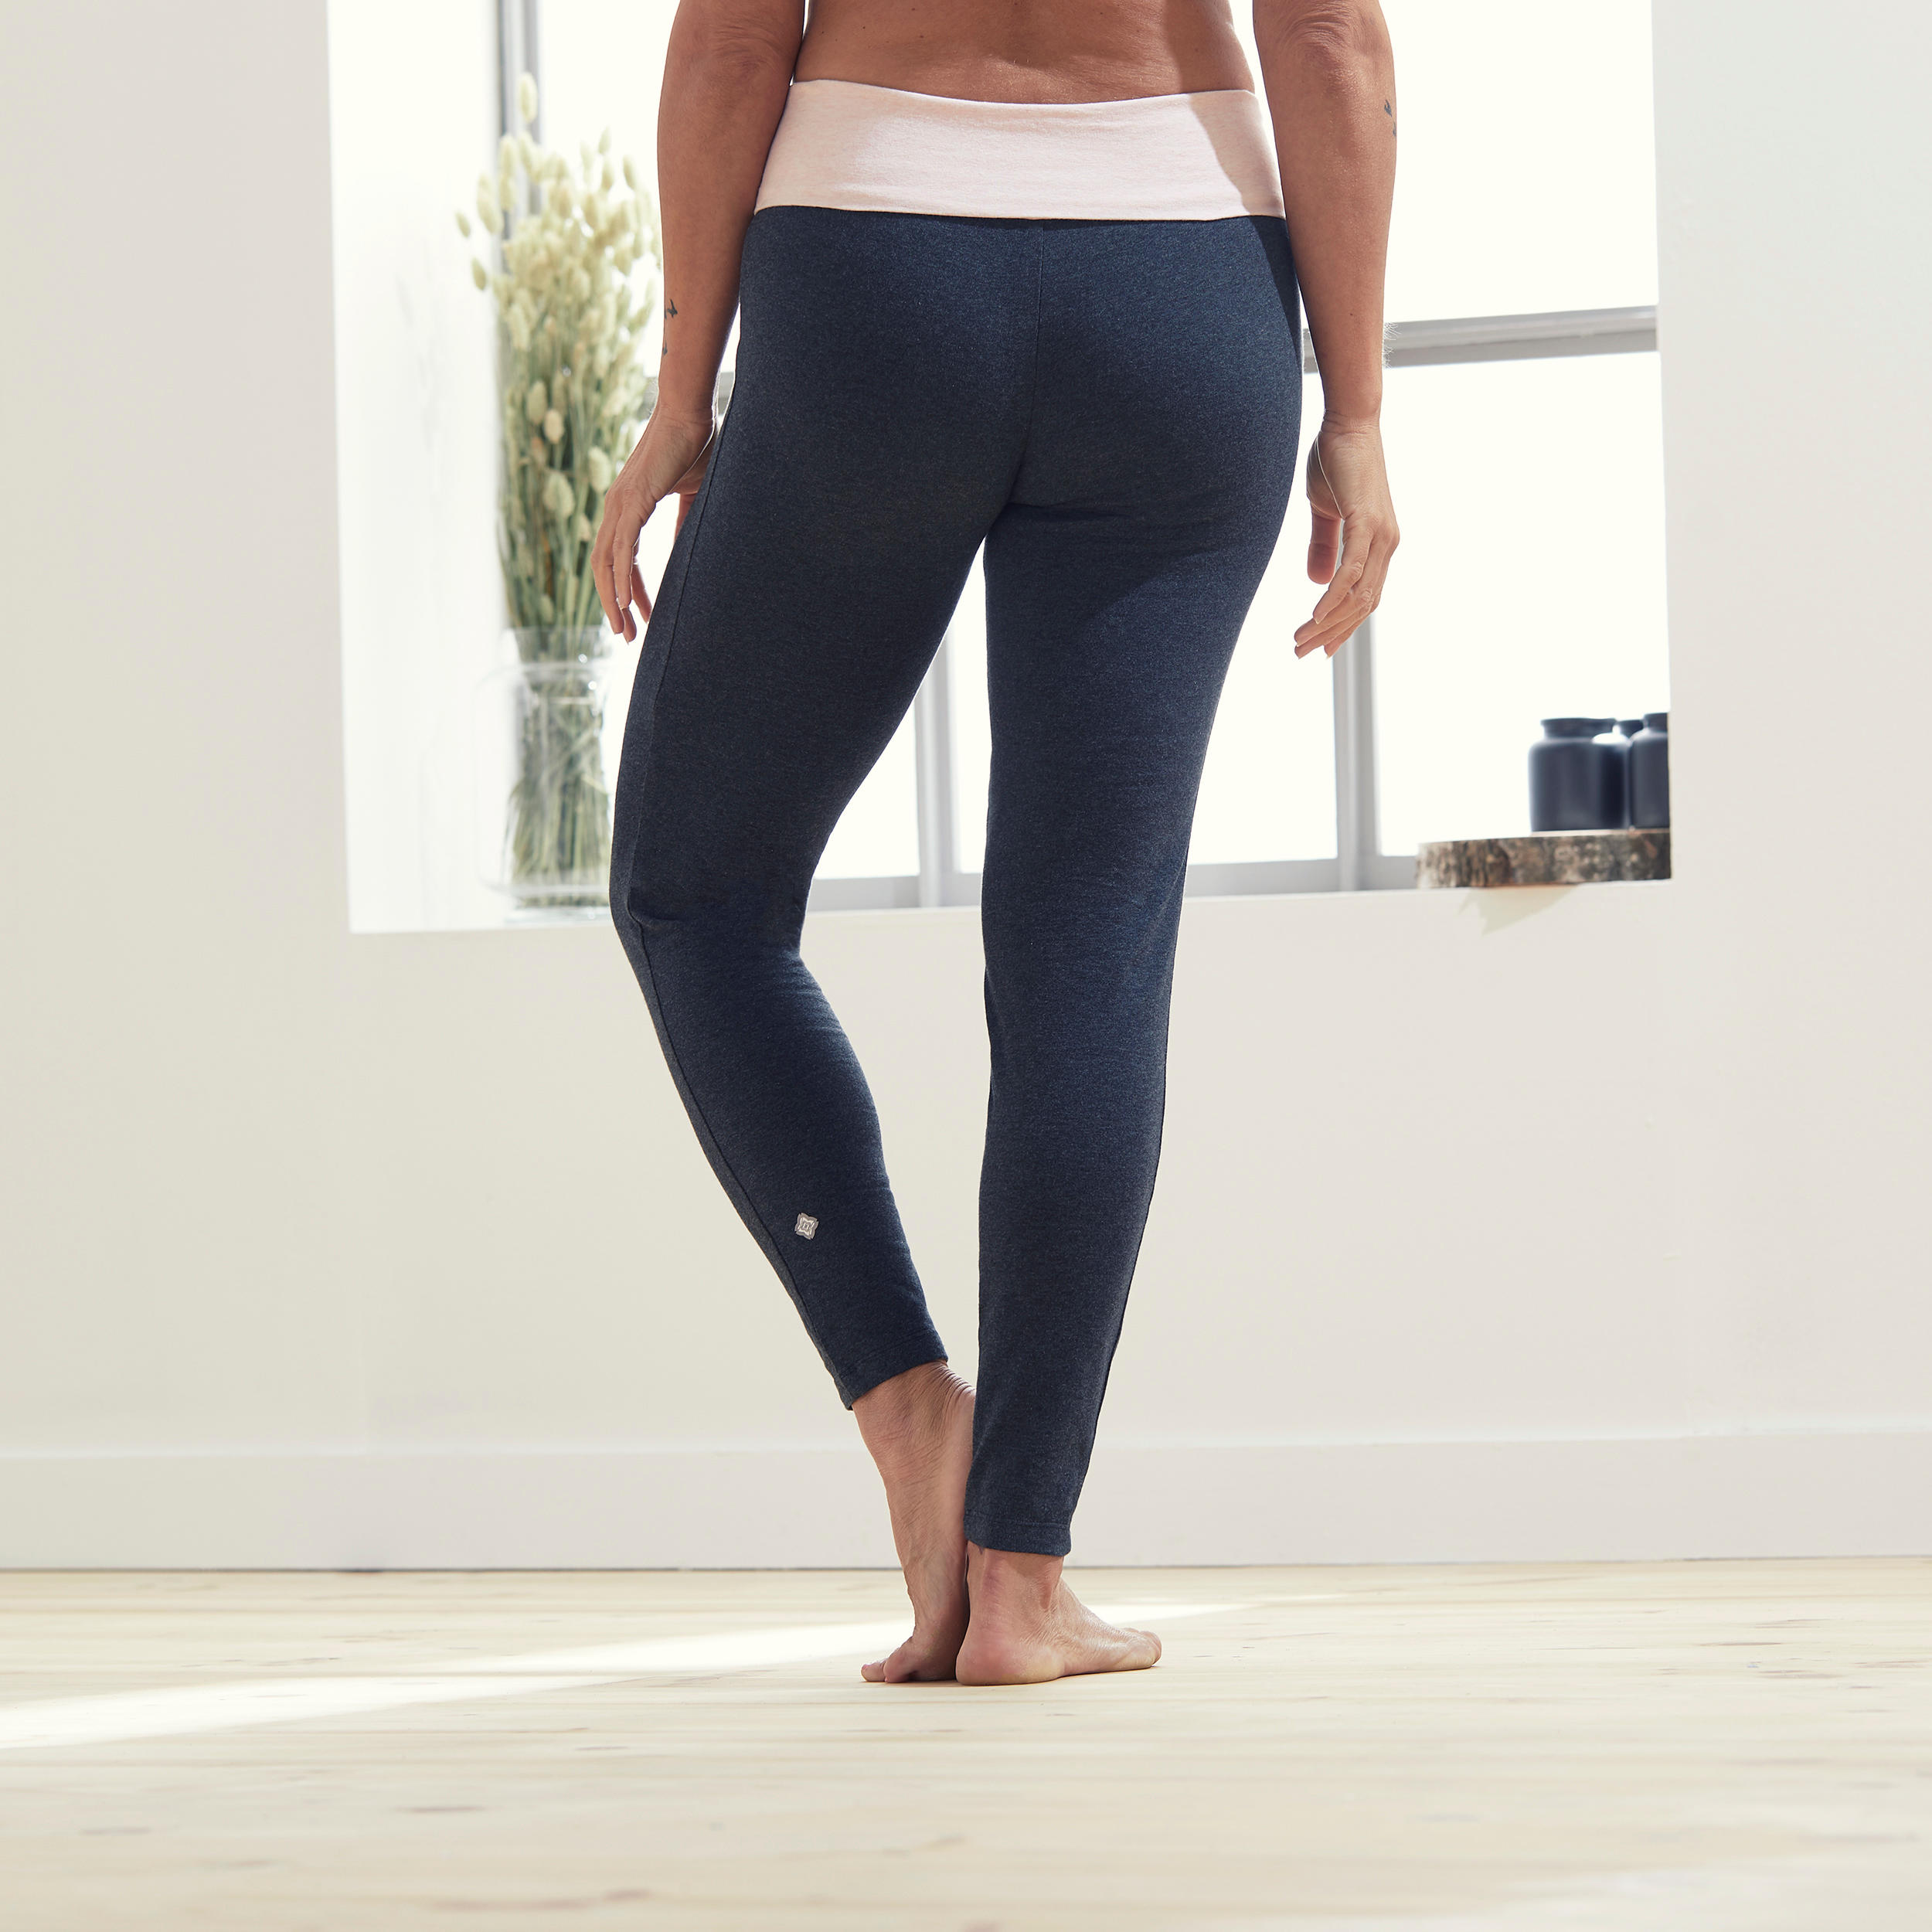 CAICJ98 Compression Leggings for Women Cotton Sport Shorts Yoga Dance Short  Pants Summer Athletic Shorts Hot Pink,XL 